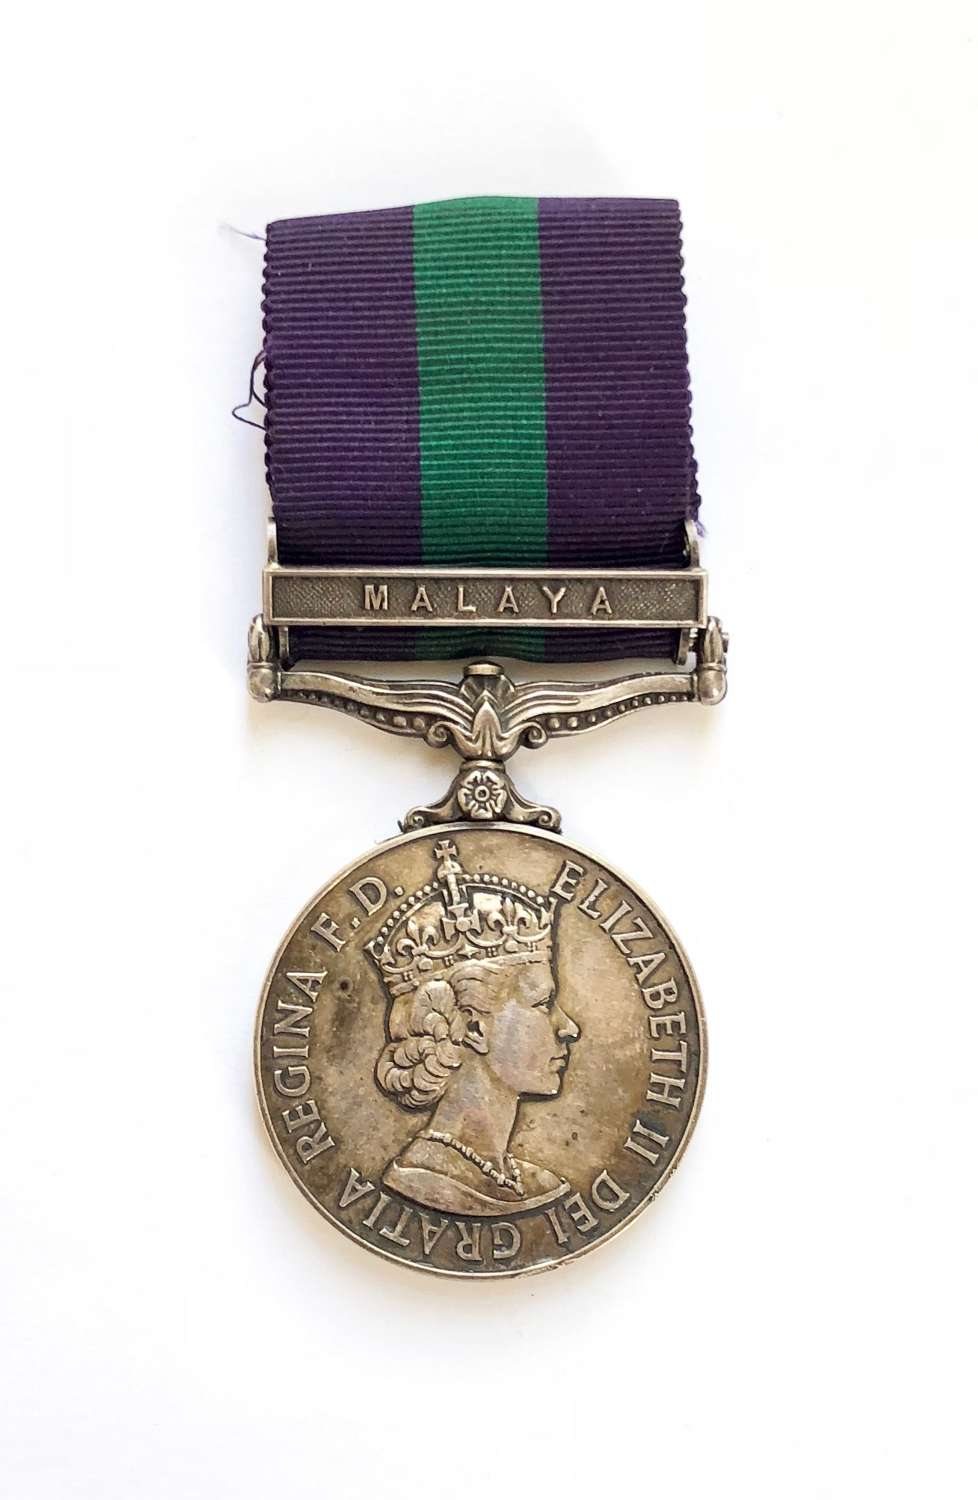 Loyals Loyal North Lancashire Regiment Medal Malaya.